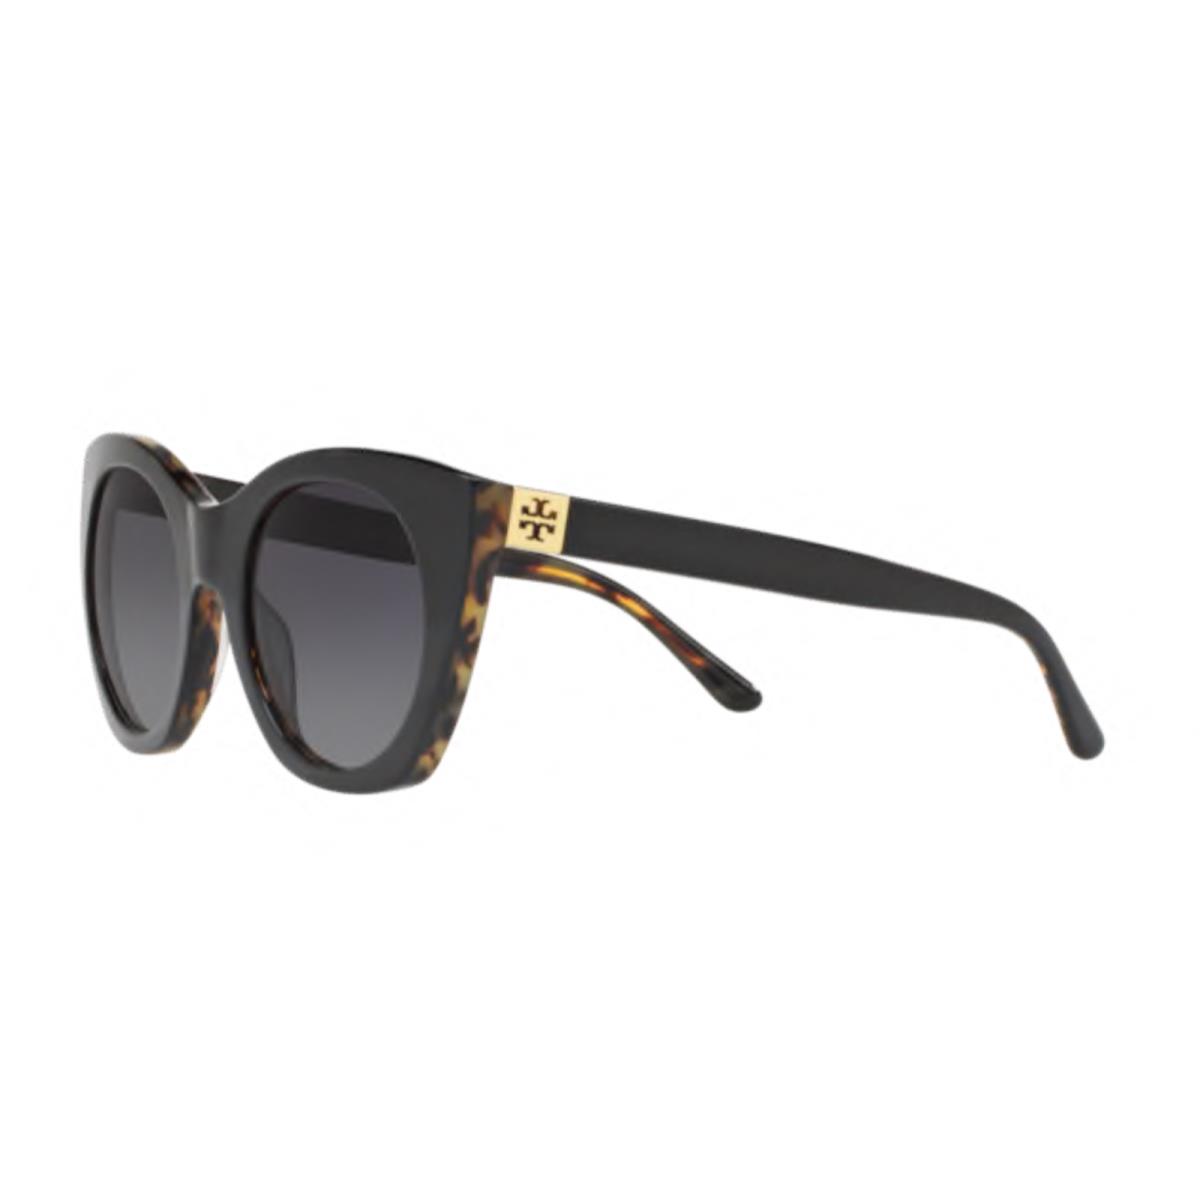 Tory Burch sunglasses  - Black & Tortoise Frame, Gray Gradient Polarized Lens